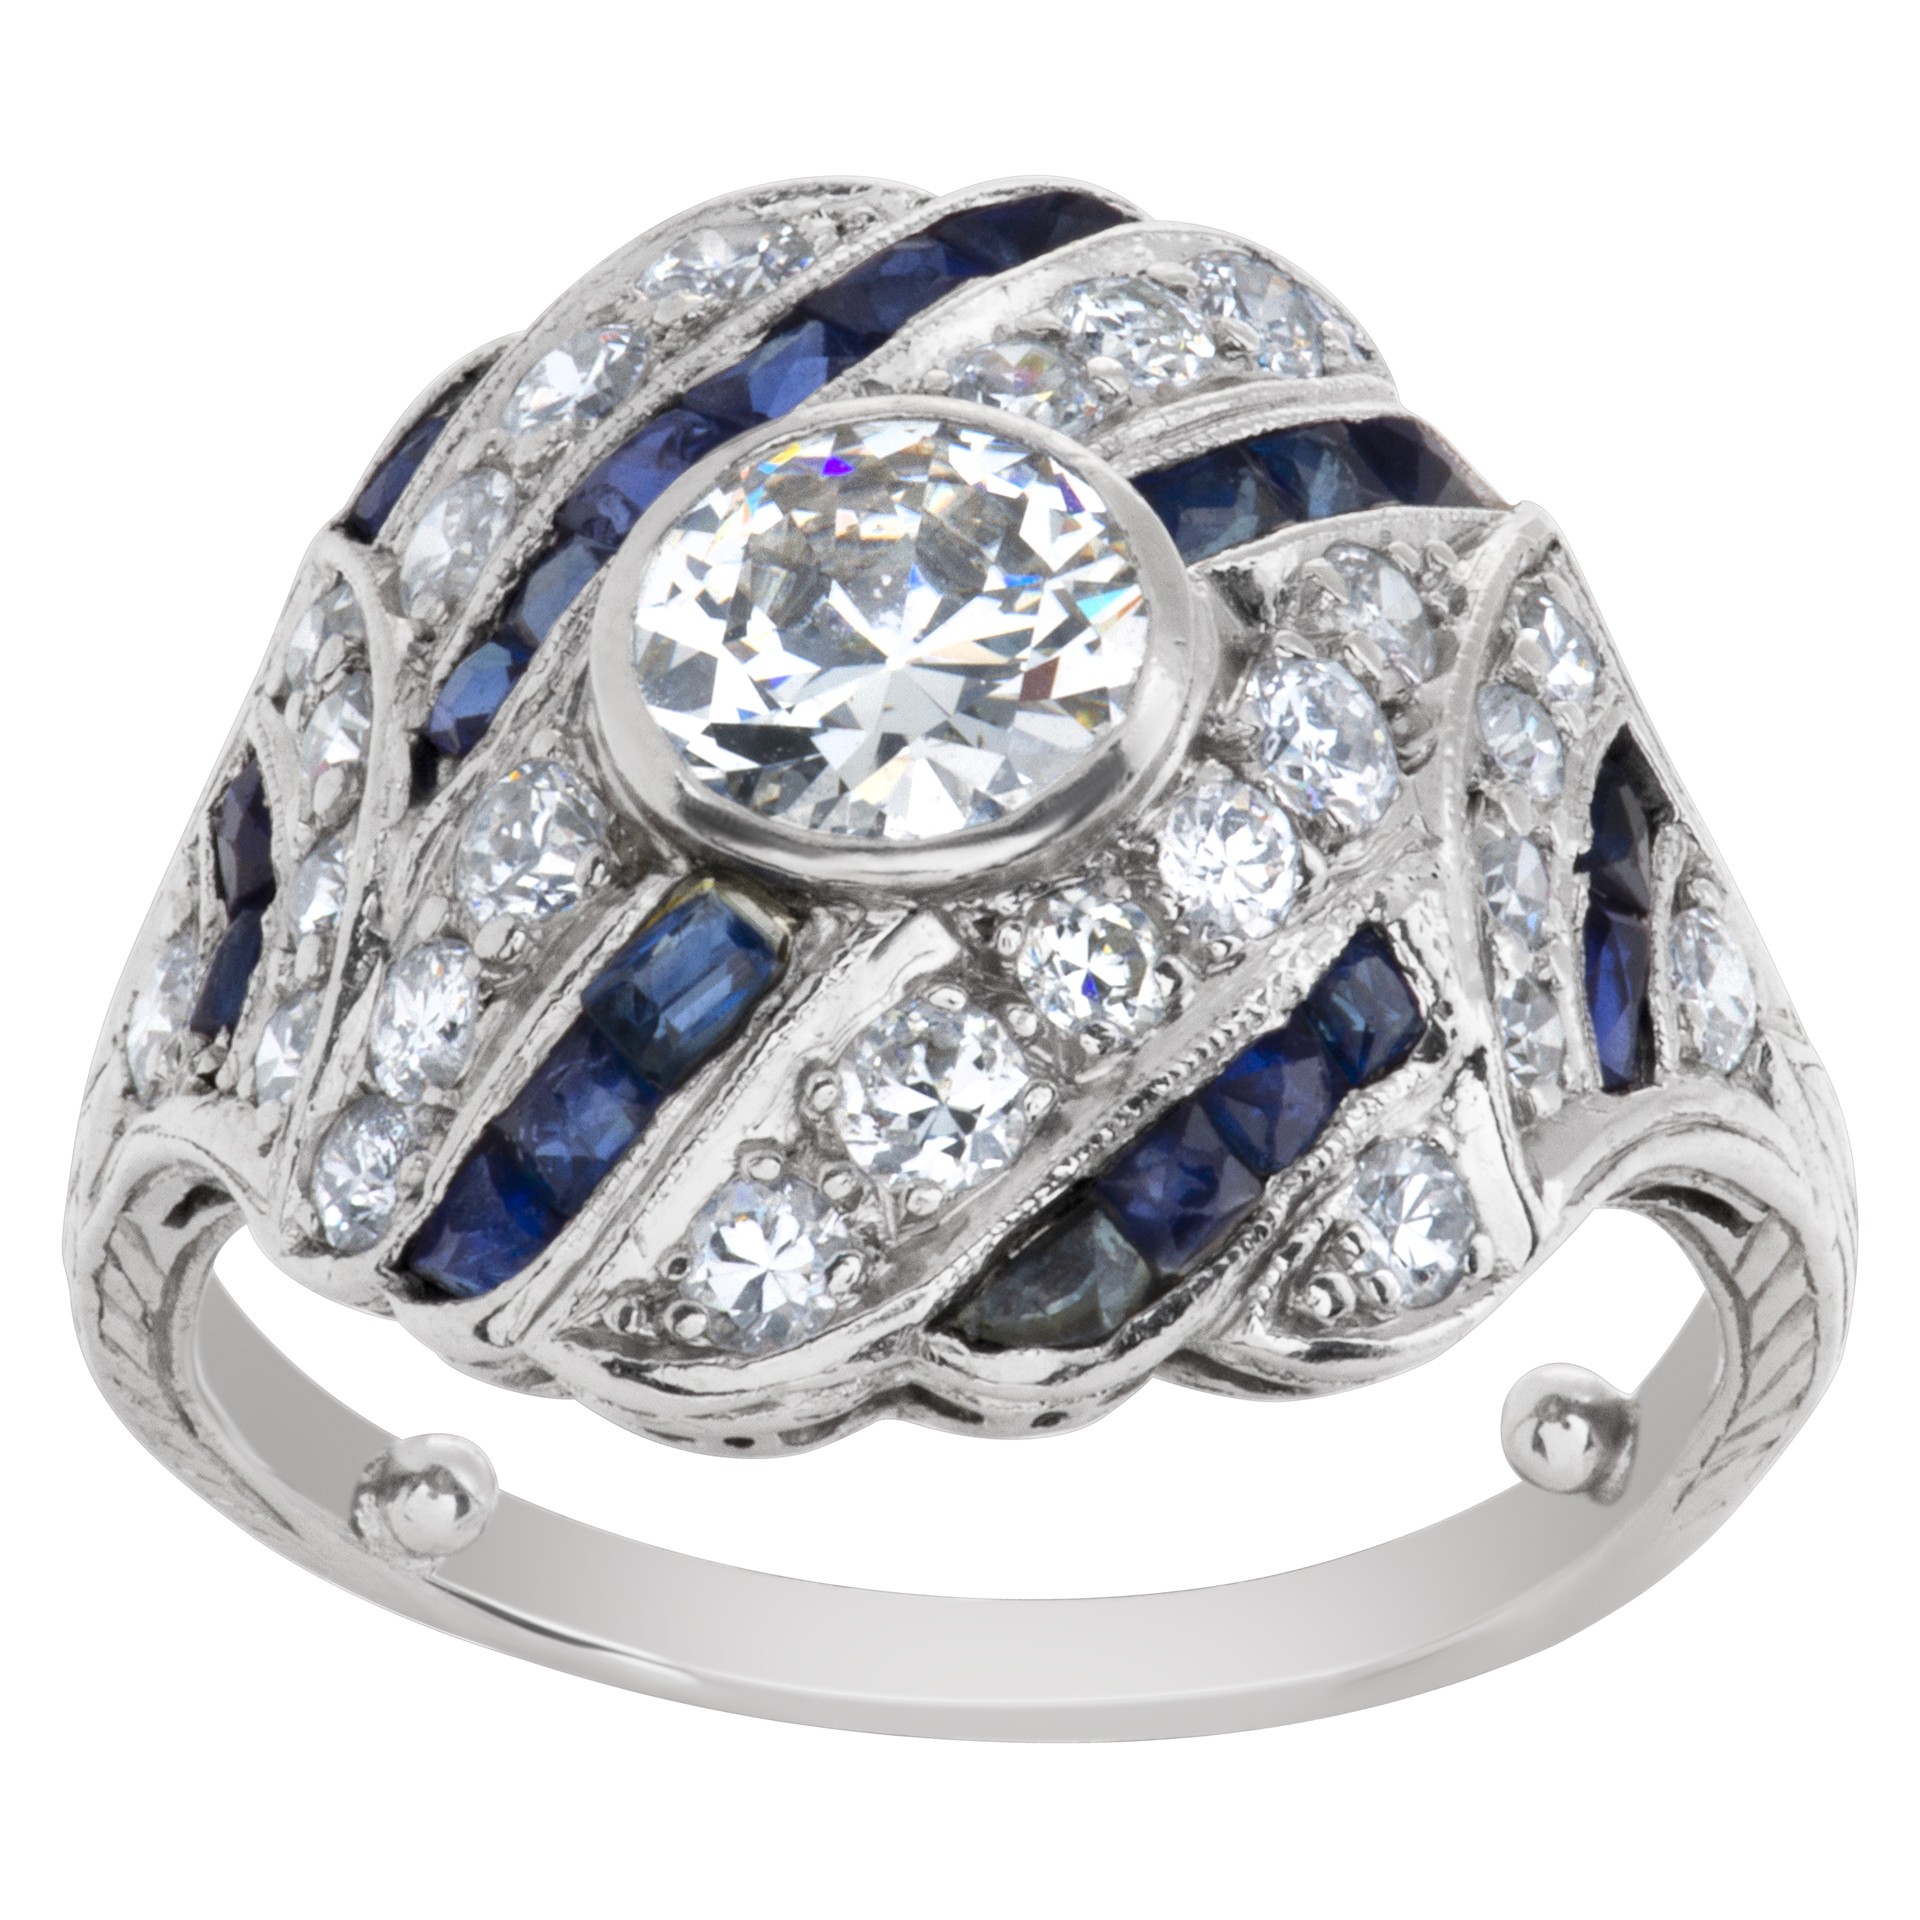 Diamond and sapphire art deco ring in platinum